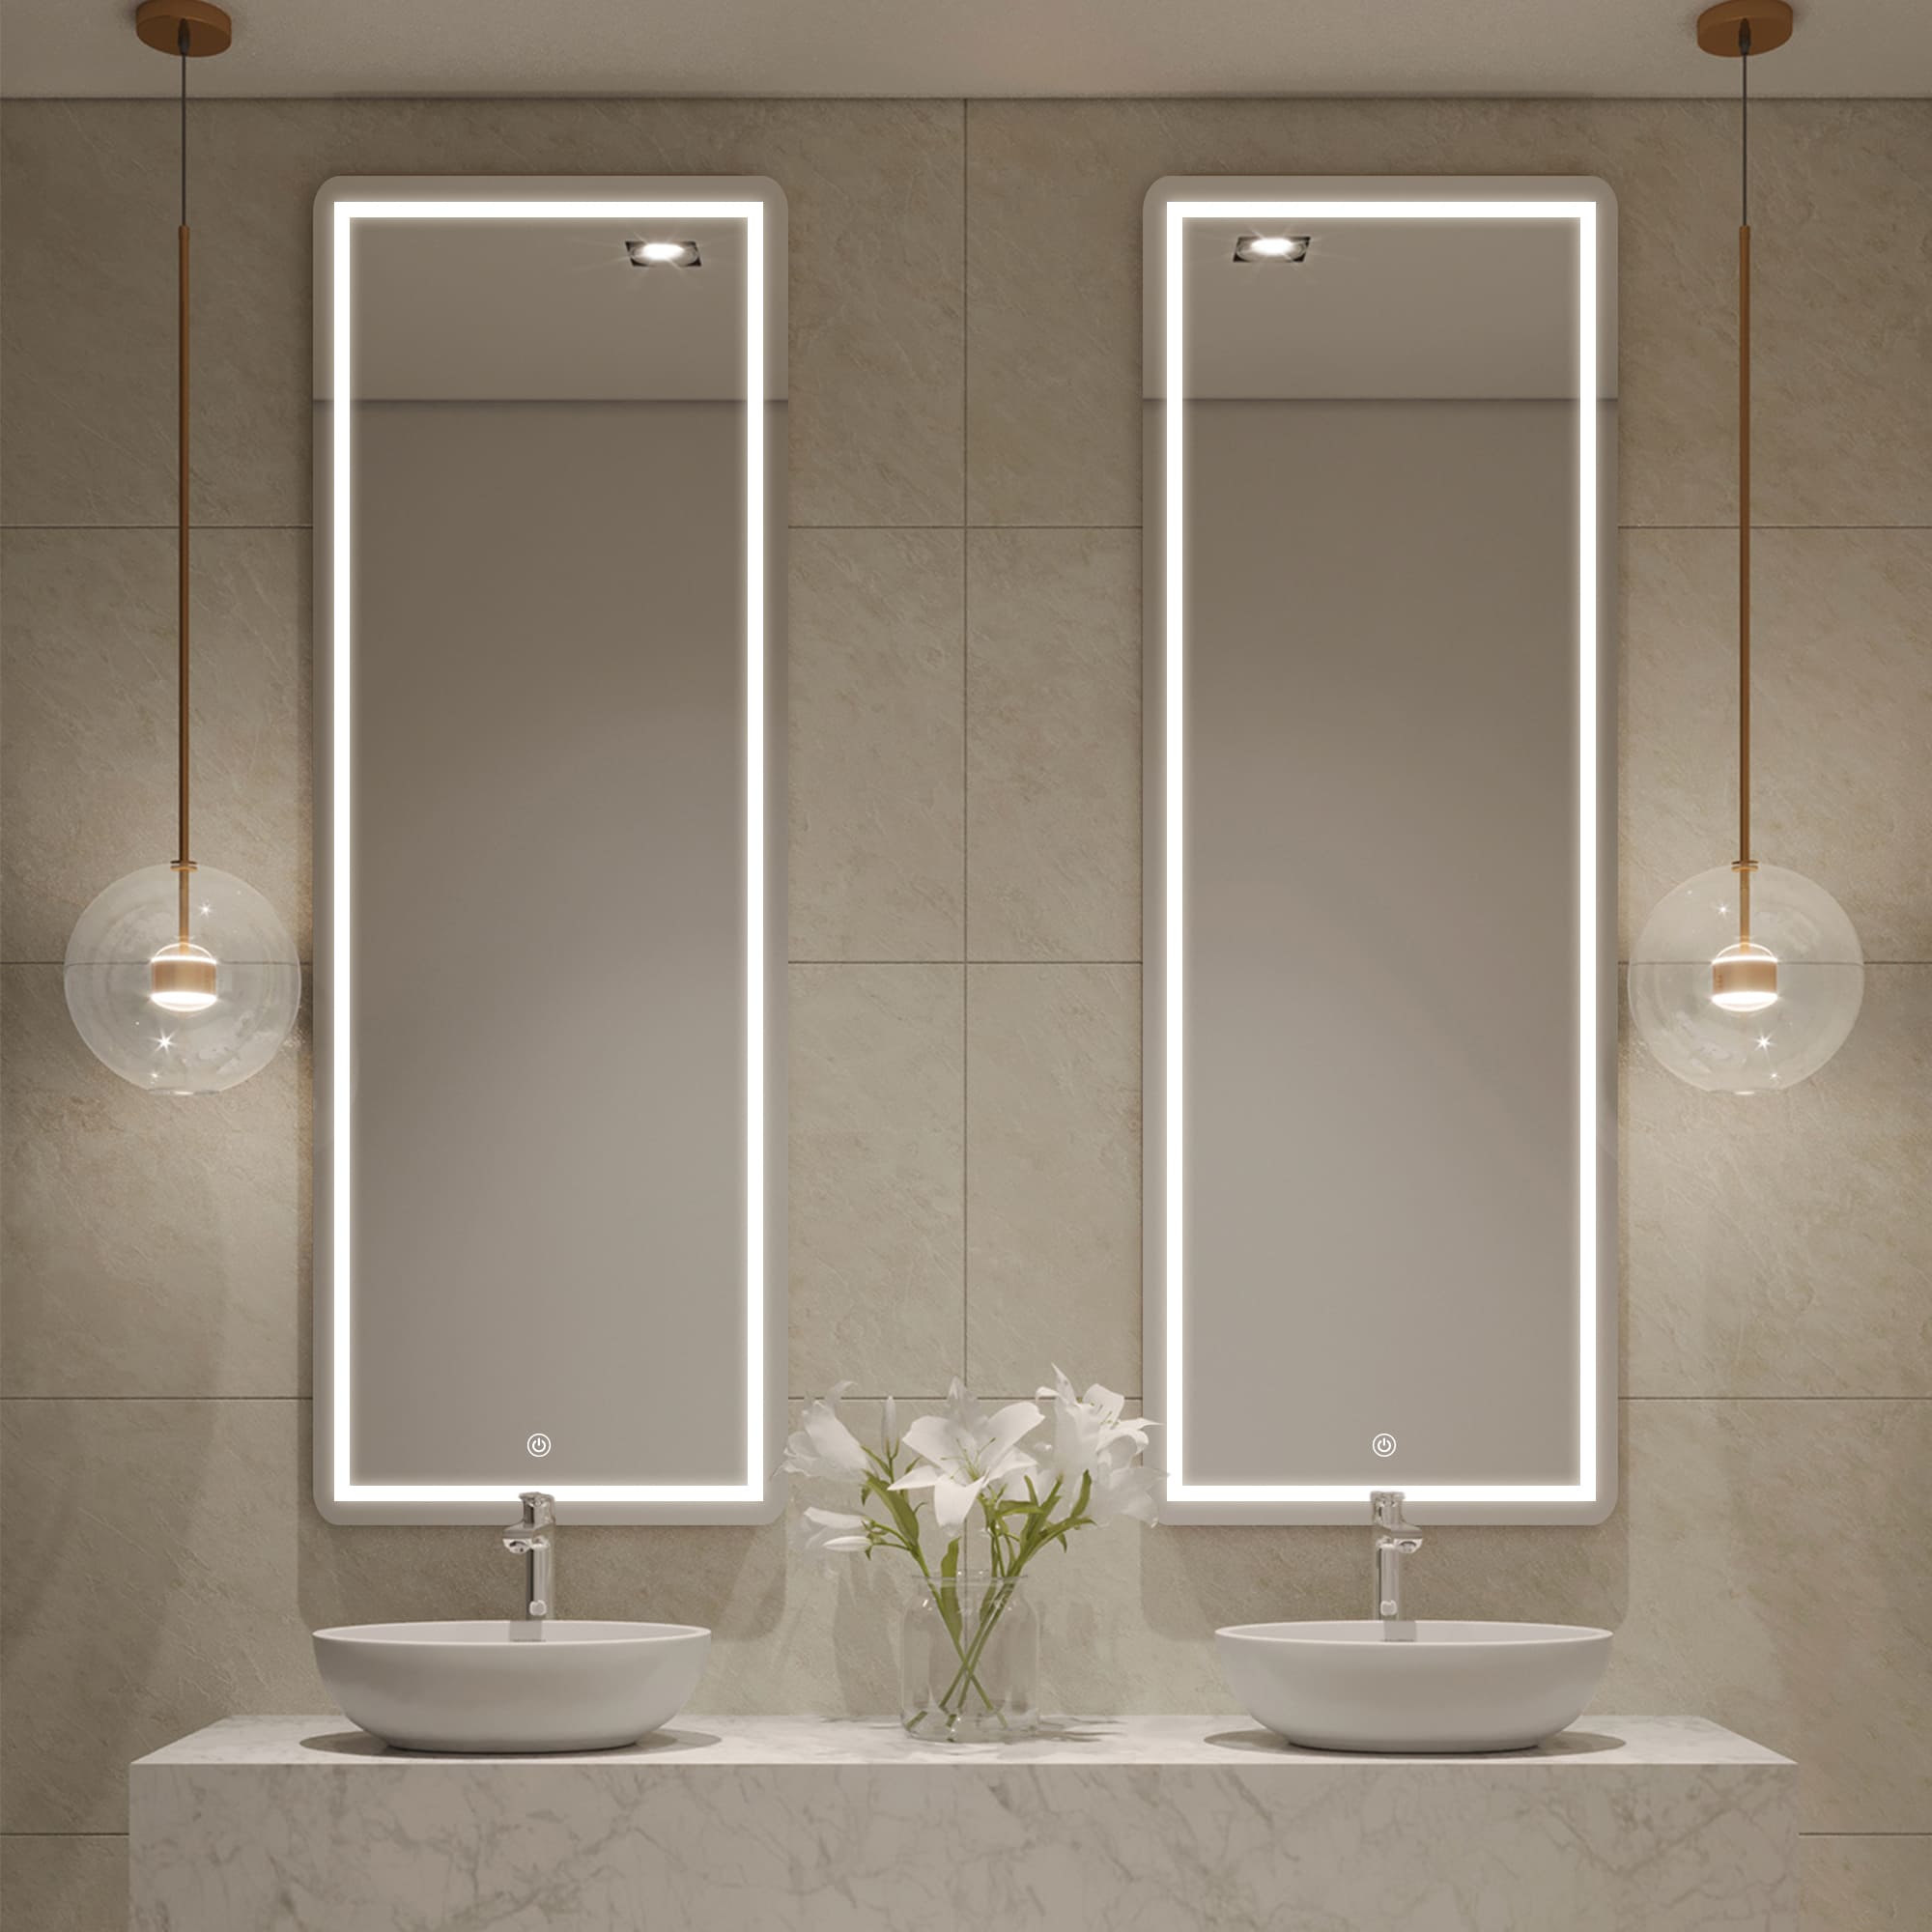 CANOPUS LED mirror for bathroom